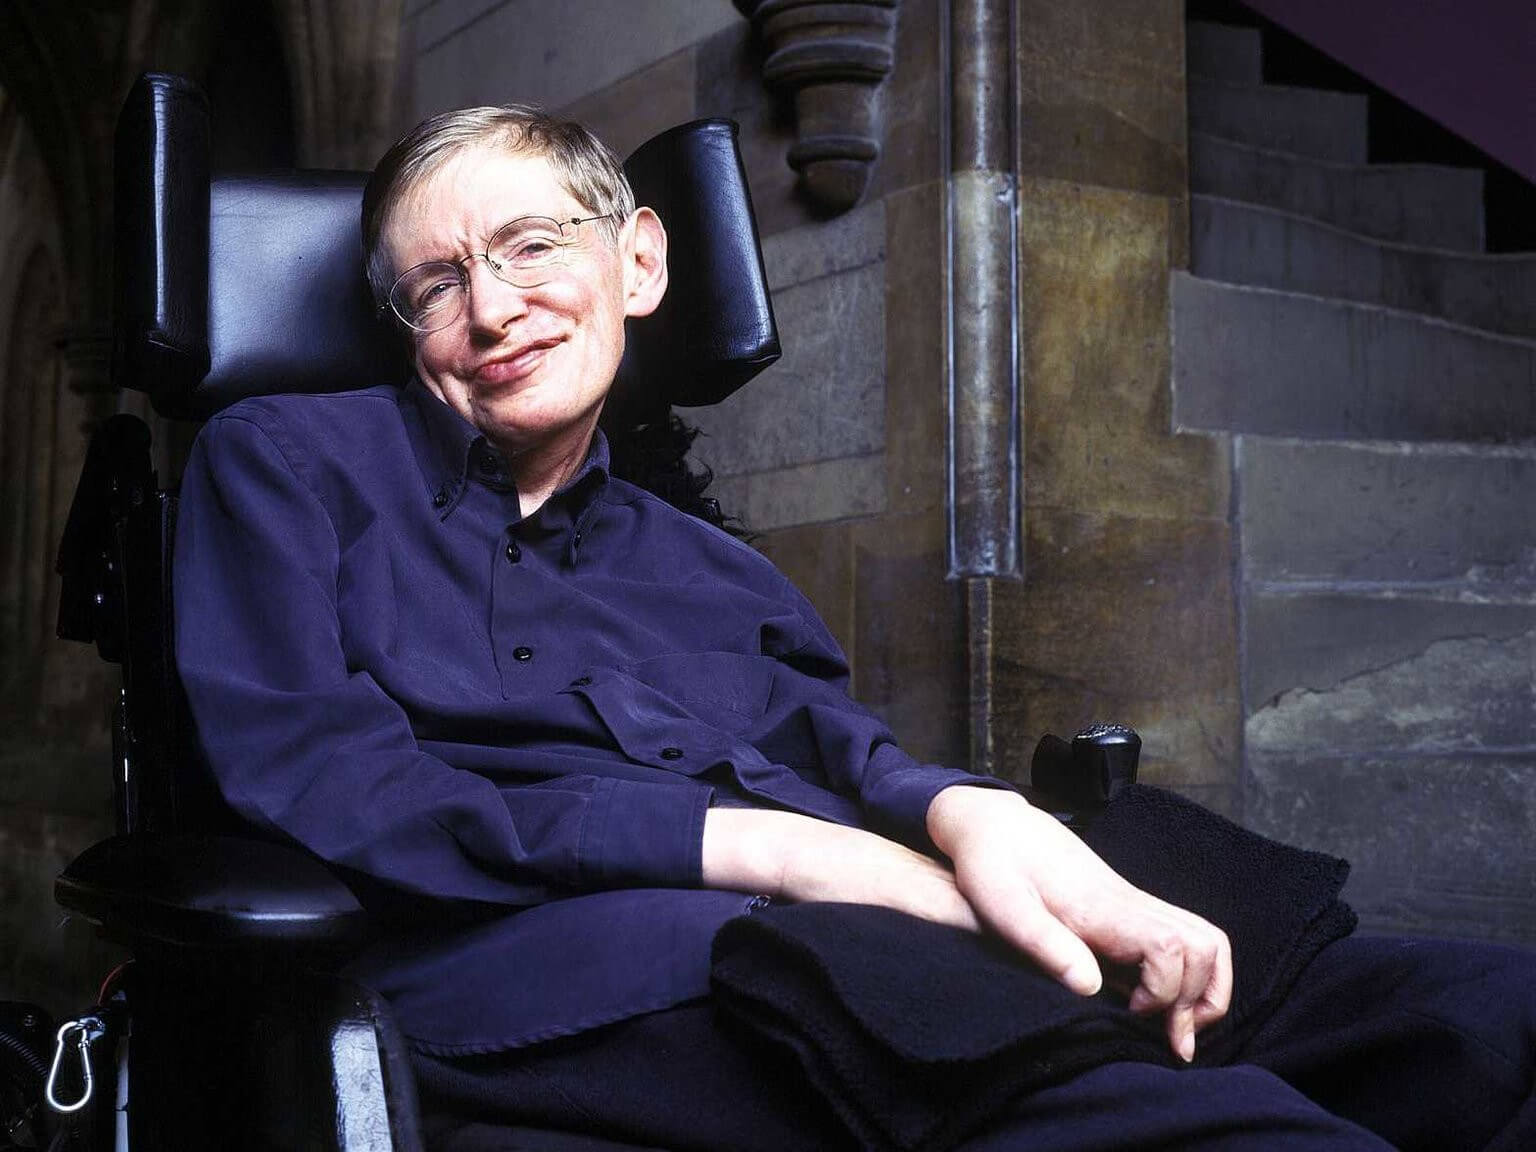 Famed physicist Stephen Hawking dies aged 76